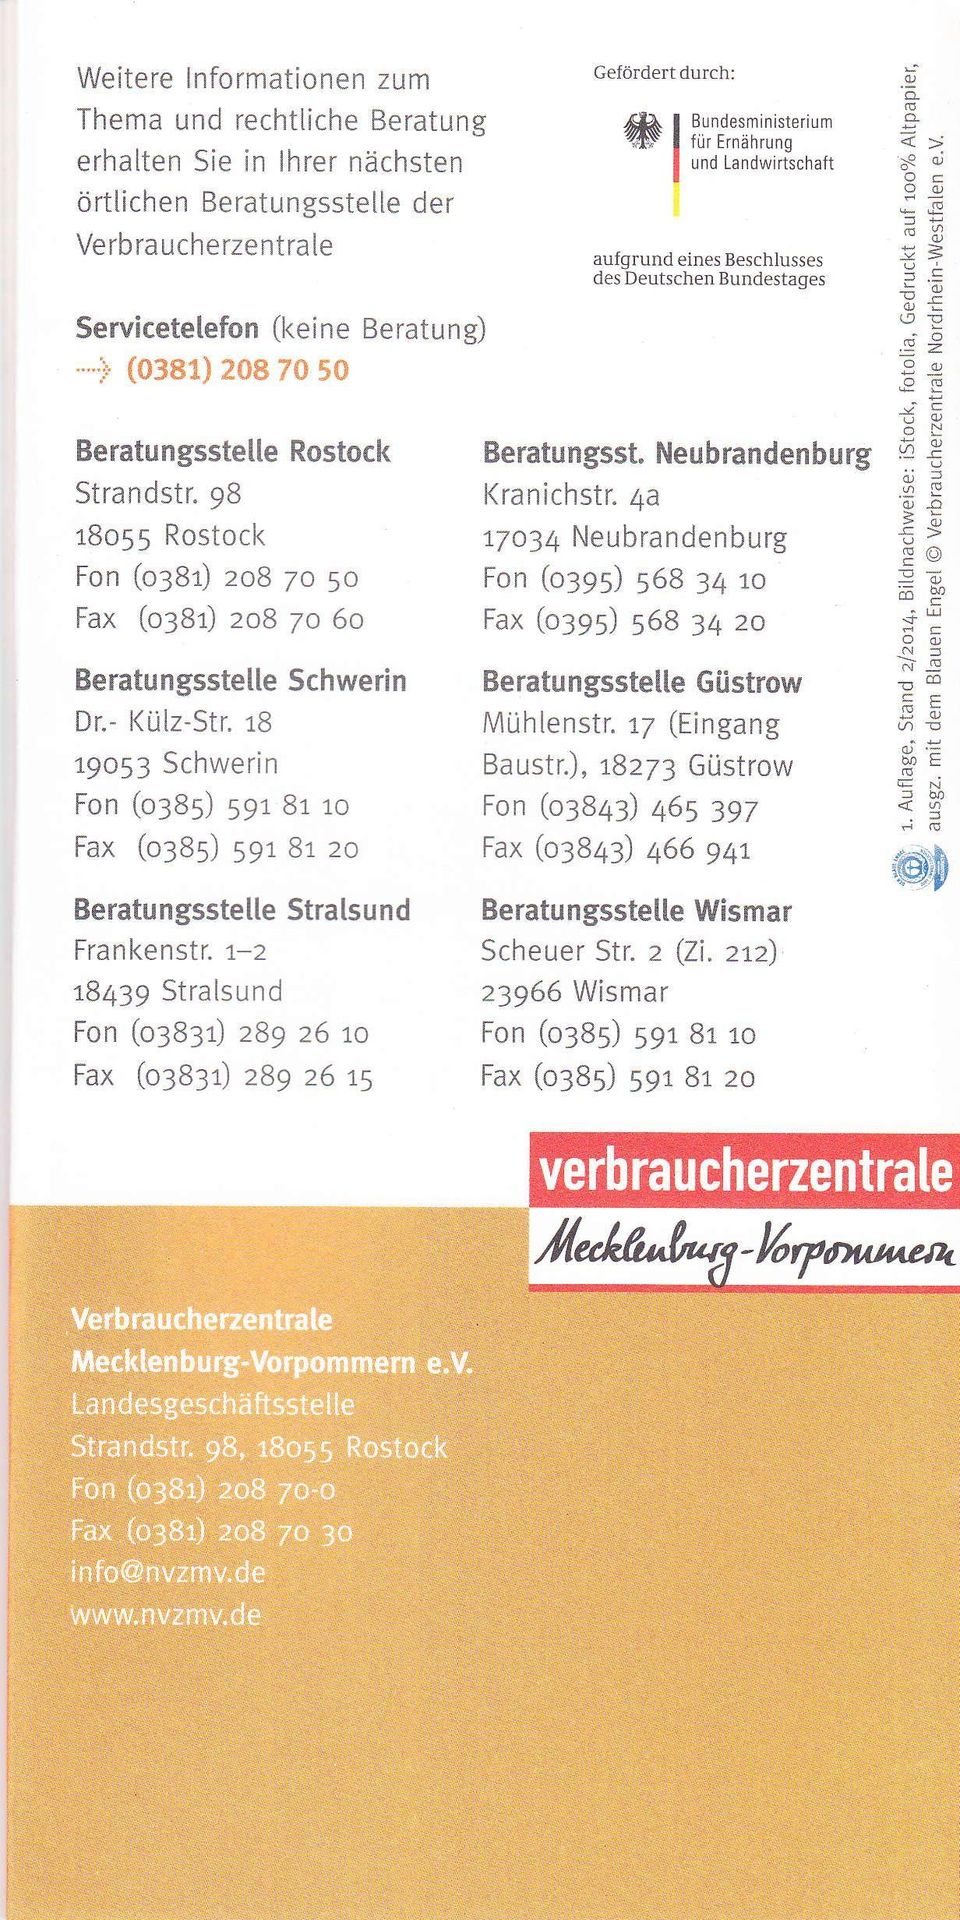 98 r8o55 Rostock Fon (o38r) zo9 7o 5o Fx (o:8r) zo8 7o 6o Bertungsstelle Schwerln Bertungsstelte Güstrow Dr.- Külz-Str. r8 r9o53 Schwerin Krnichstr.